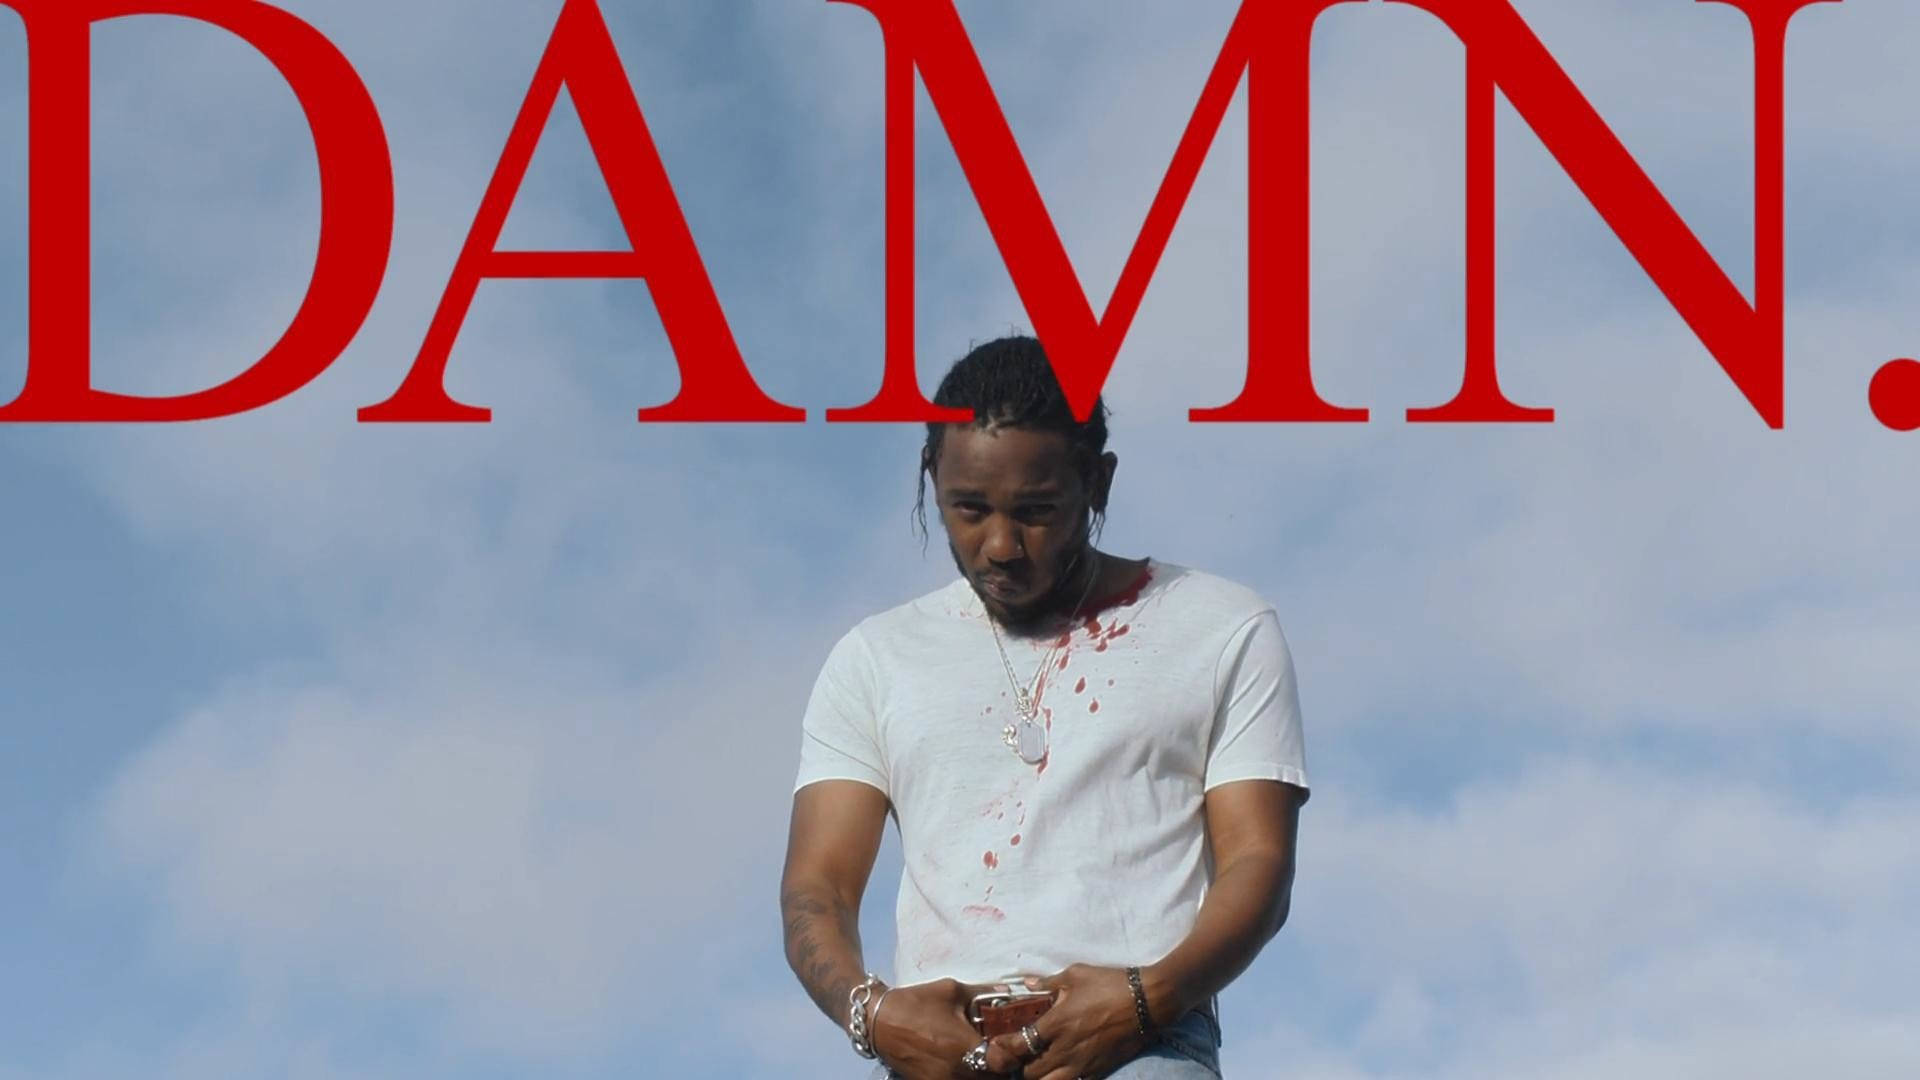 Kendrick Lamar wallpaper for y'all : r/KendrickLamar